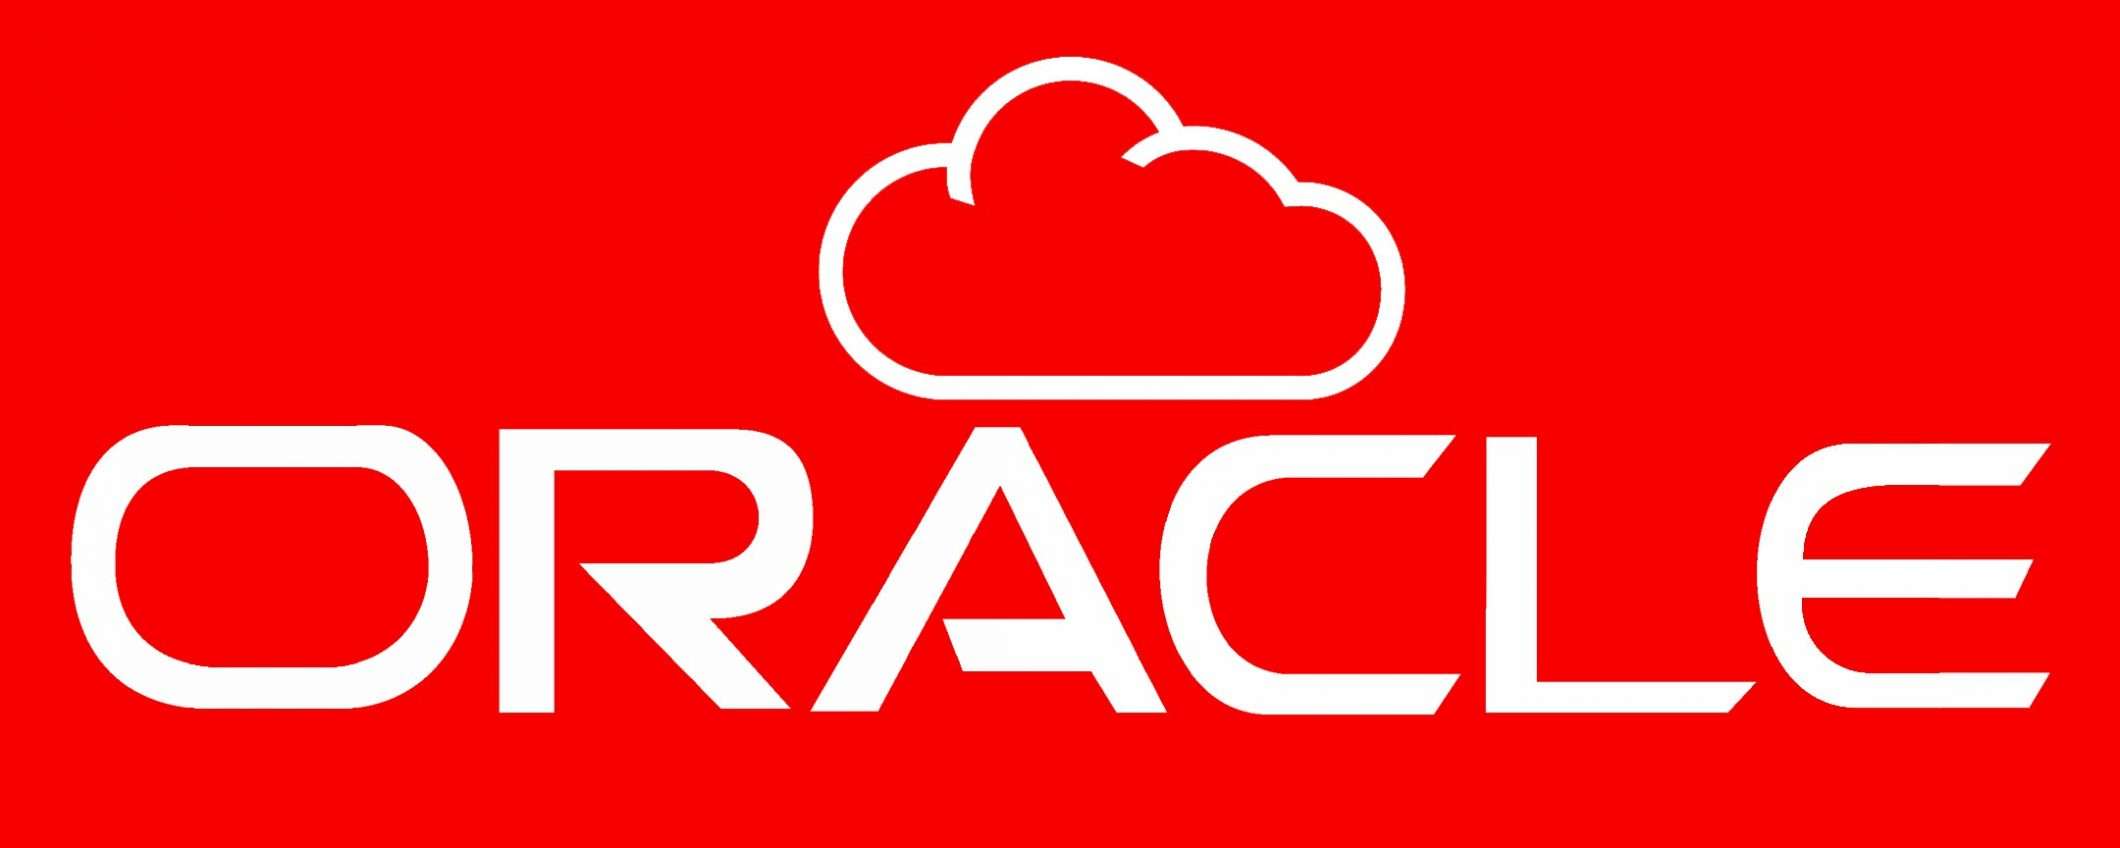 Il business di Oracle vola grazie al cloud